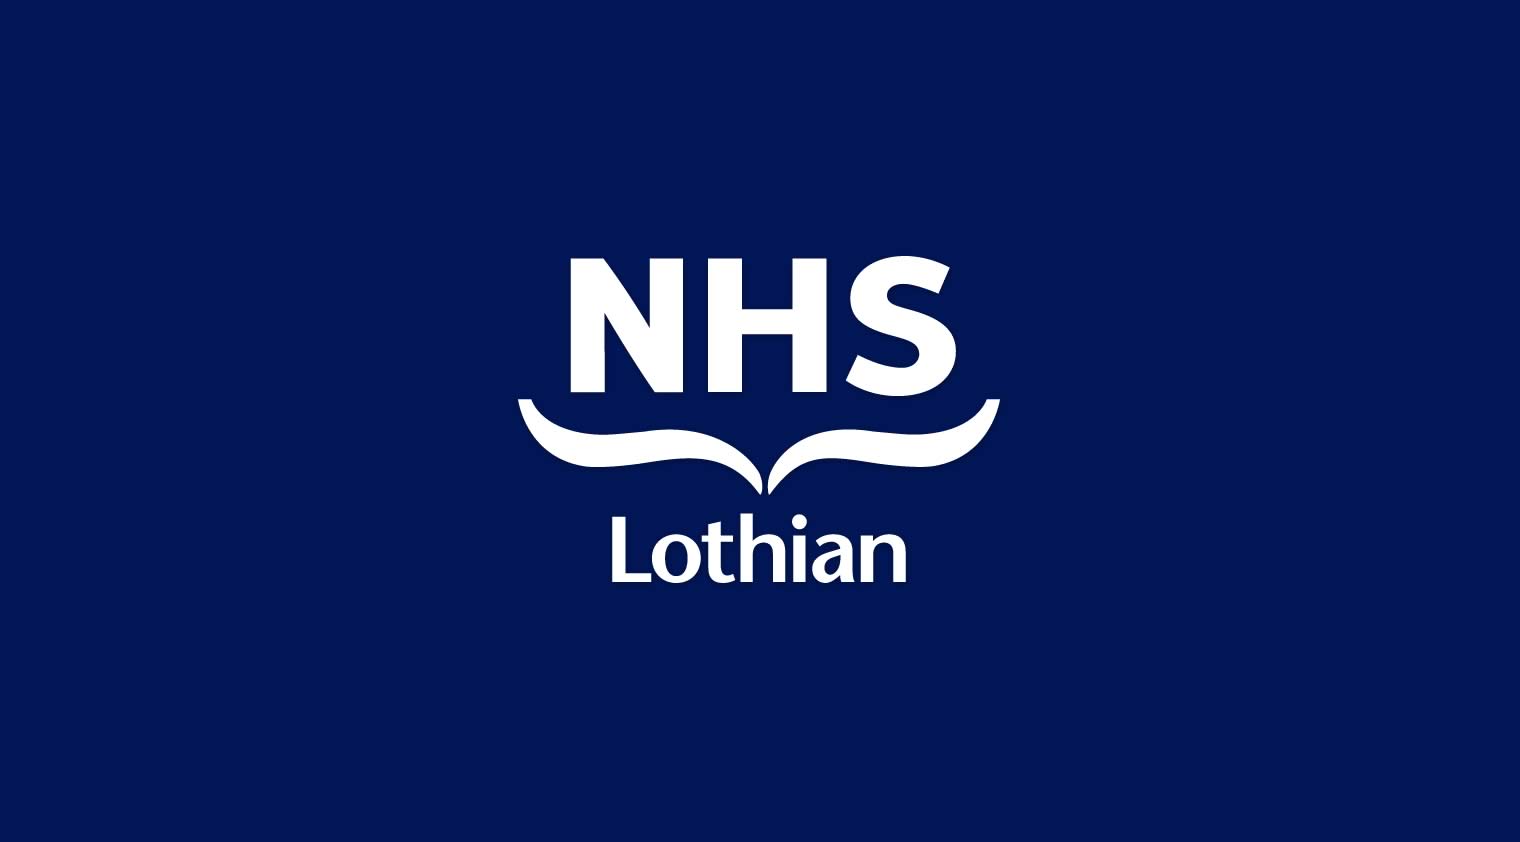 NHS Lothian logo on a blue background